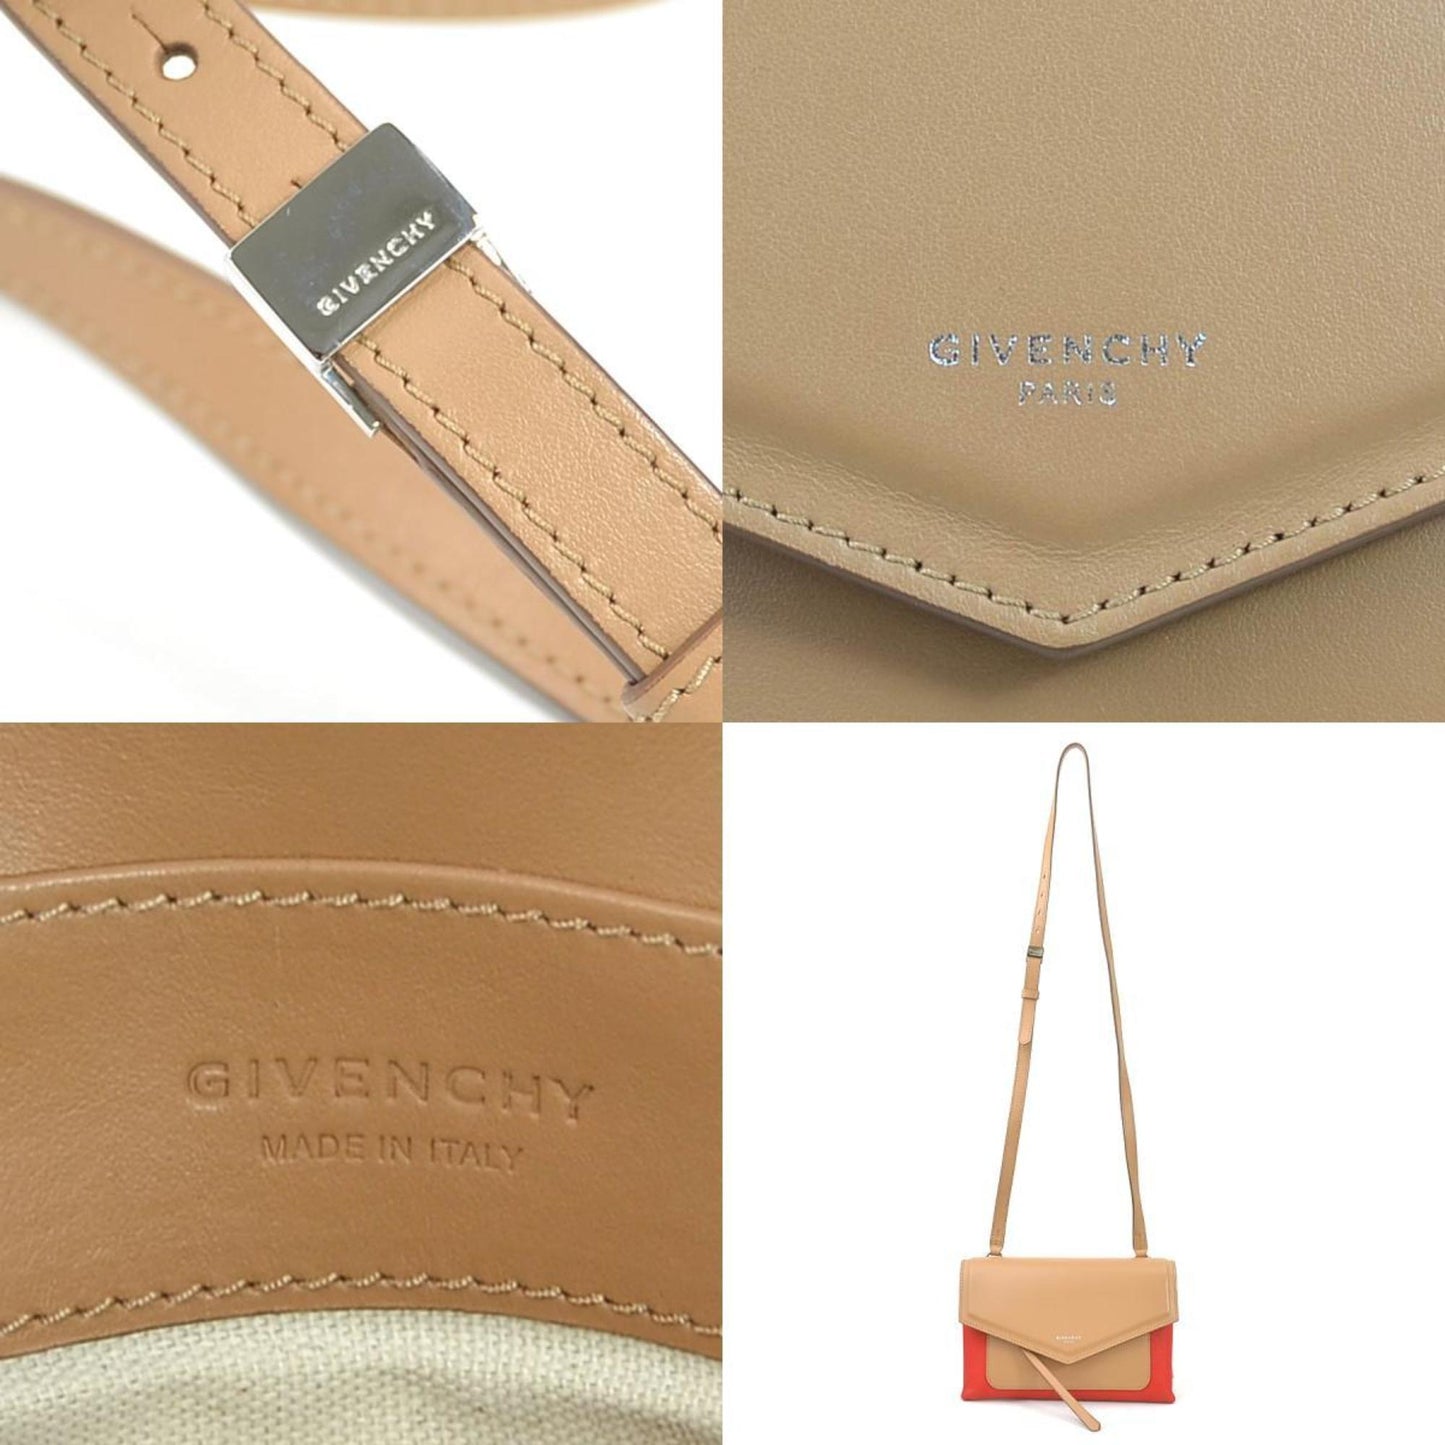 Givenchy Women's Camel Leather Shoulder Bag with Dust Bag by Famous Designer in Camel